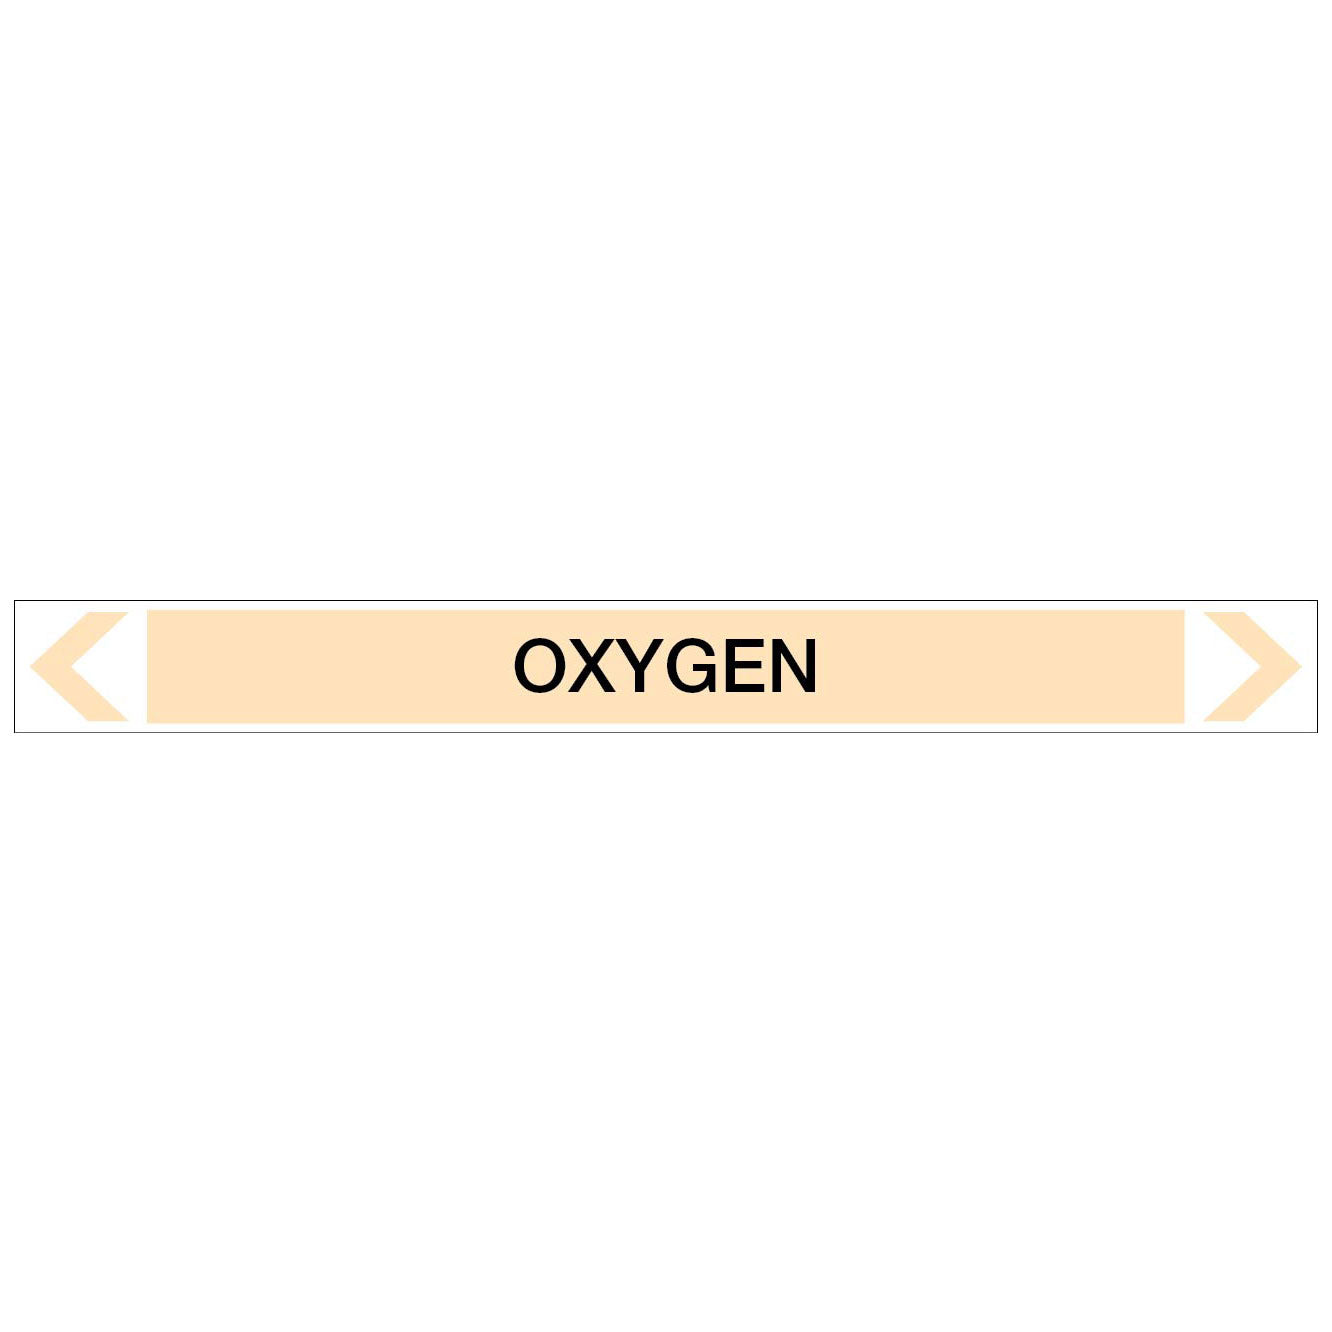 Gases - Oxygen - Pipe Marker Sticker